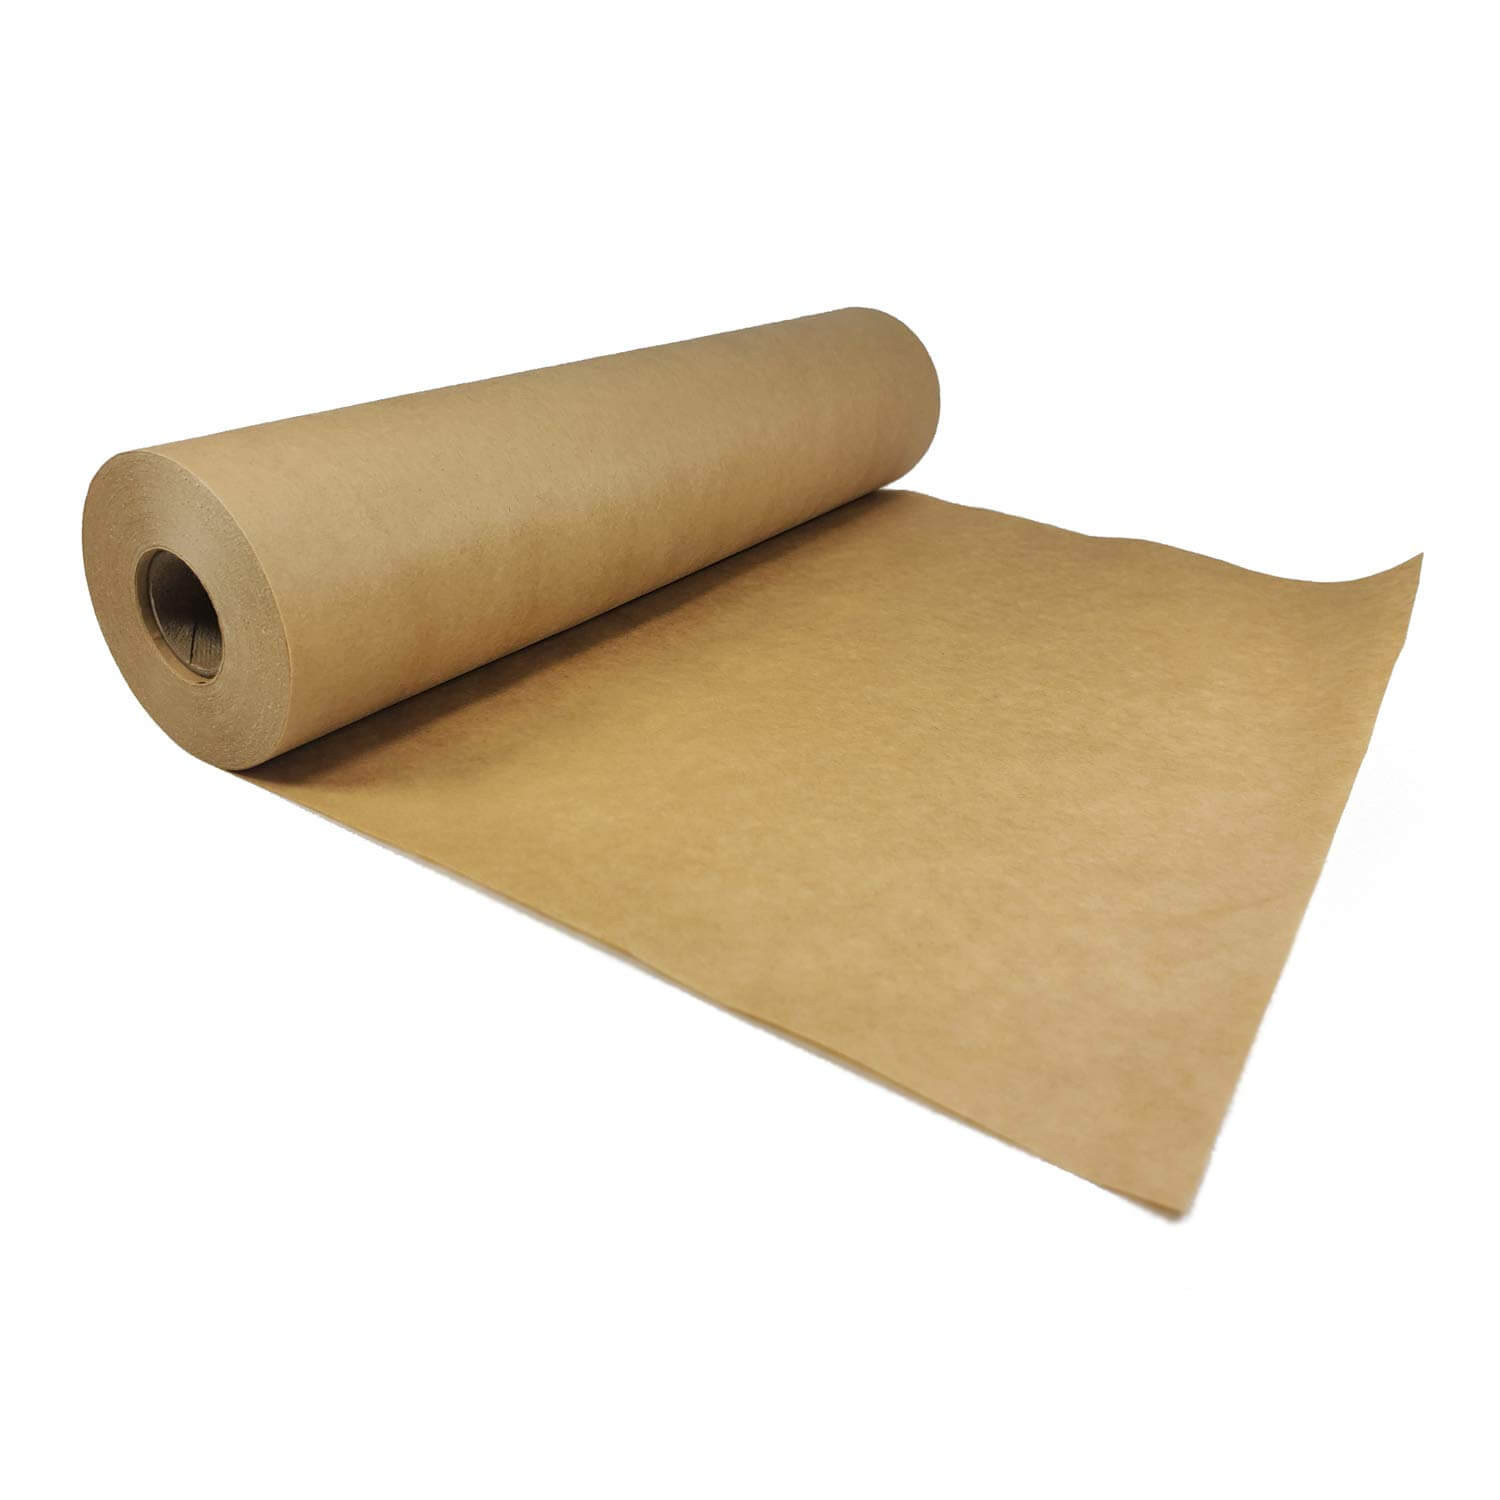 3M™ Masking Paper, Brown, 900 mm x 400 m, 06283